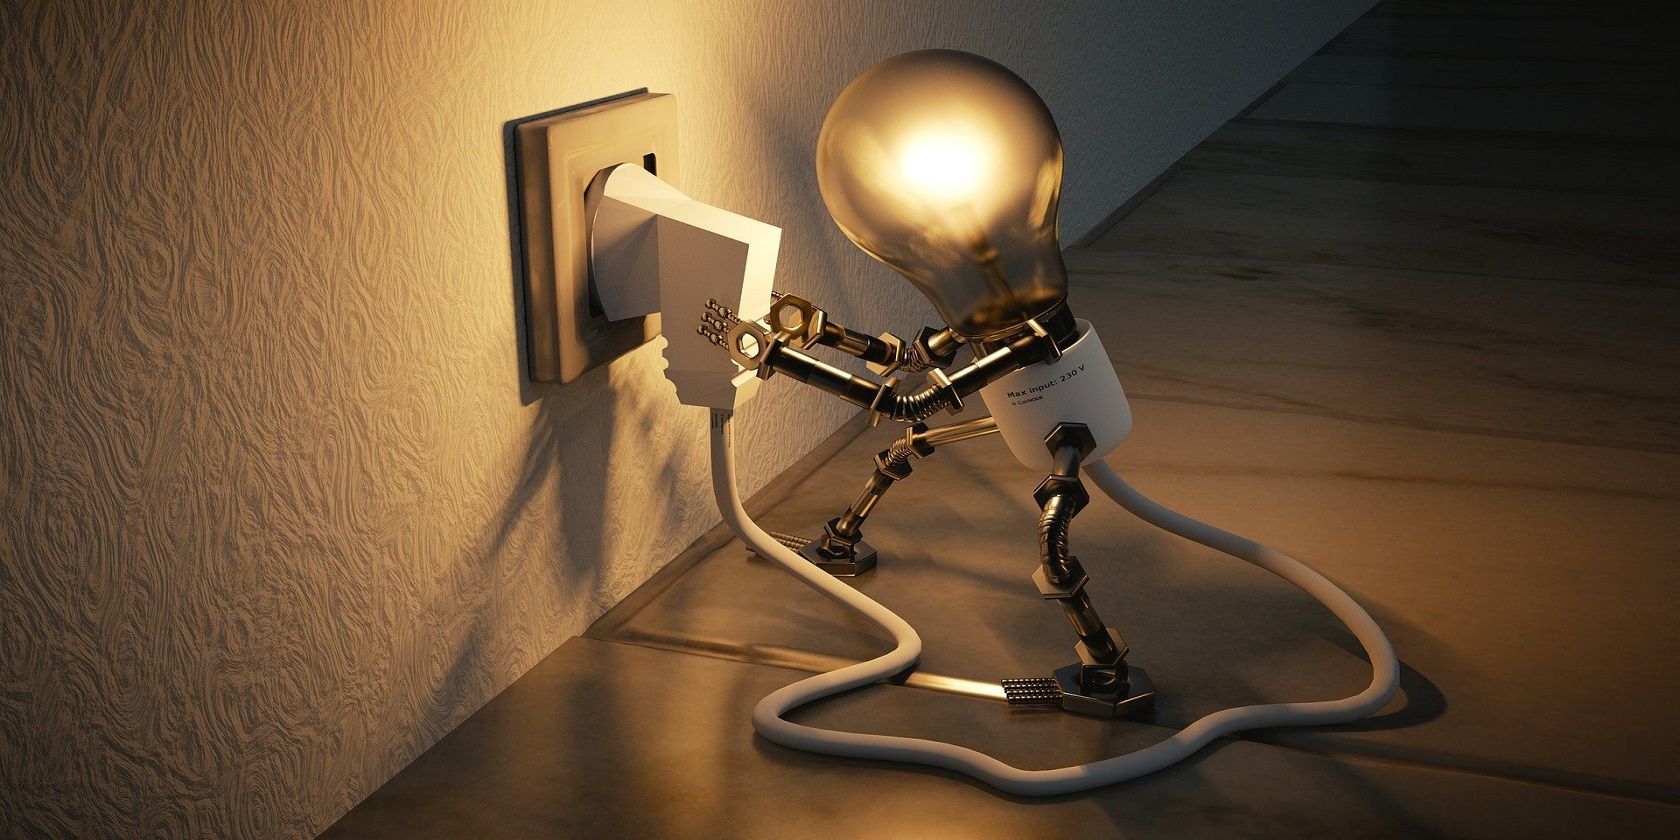 Illustration of a lightbulb holding onto its plug